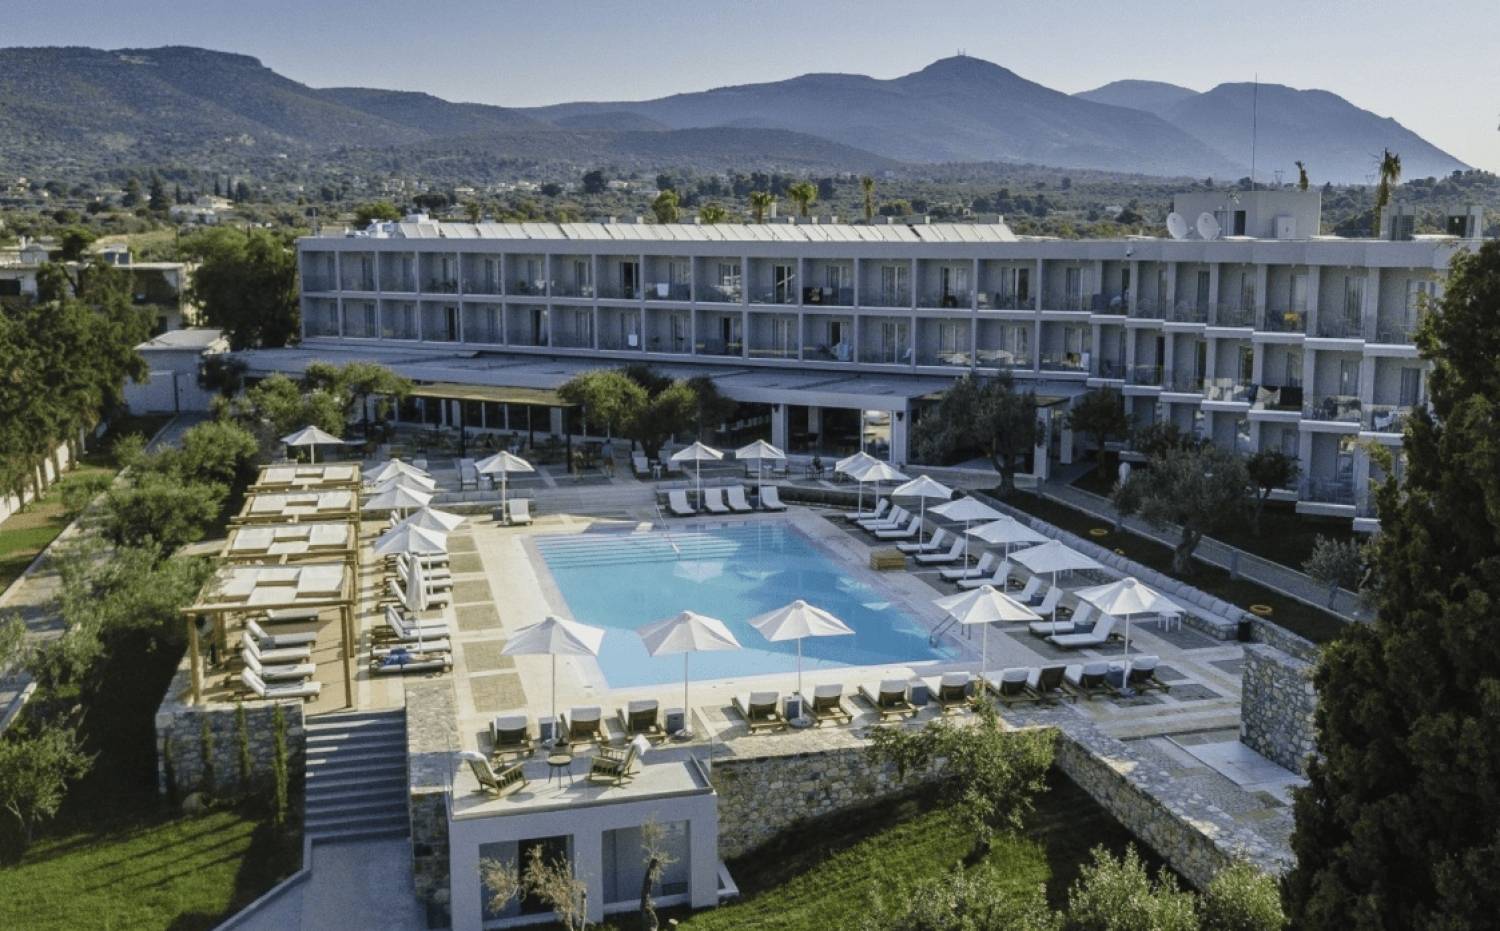 «Amaronda Resort & Spa»: Ενας παράδεισος με θέα - Μεγάλο καλοκαιρινό giveaway! - Κερδίστε διήμερο διακοπών